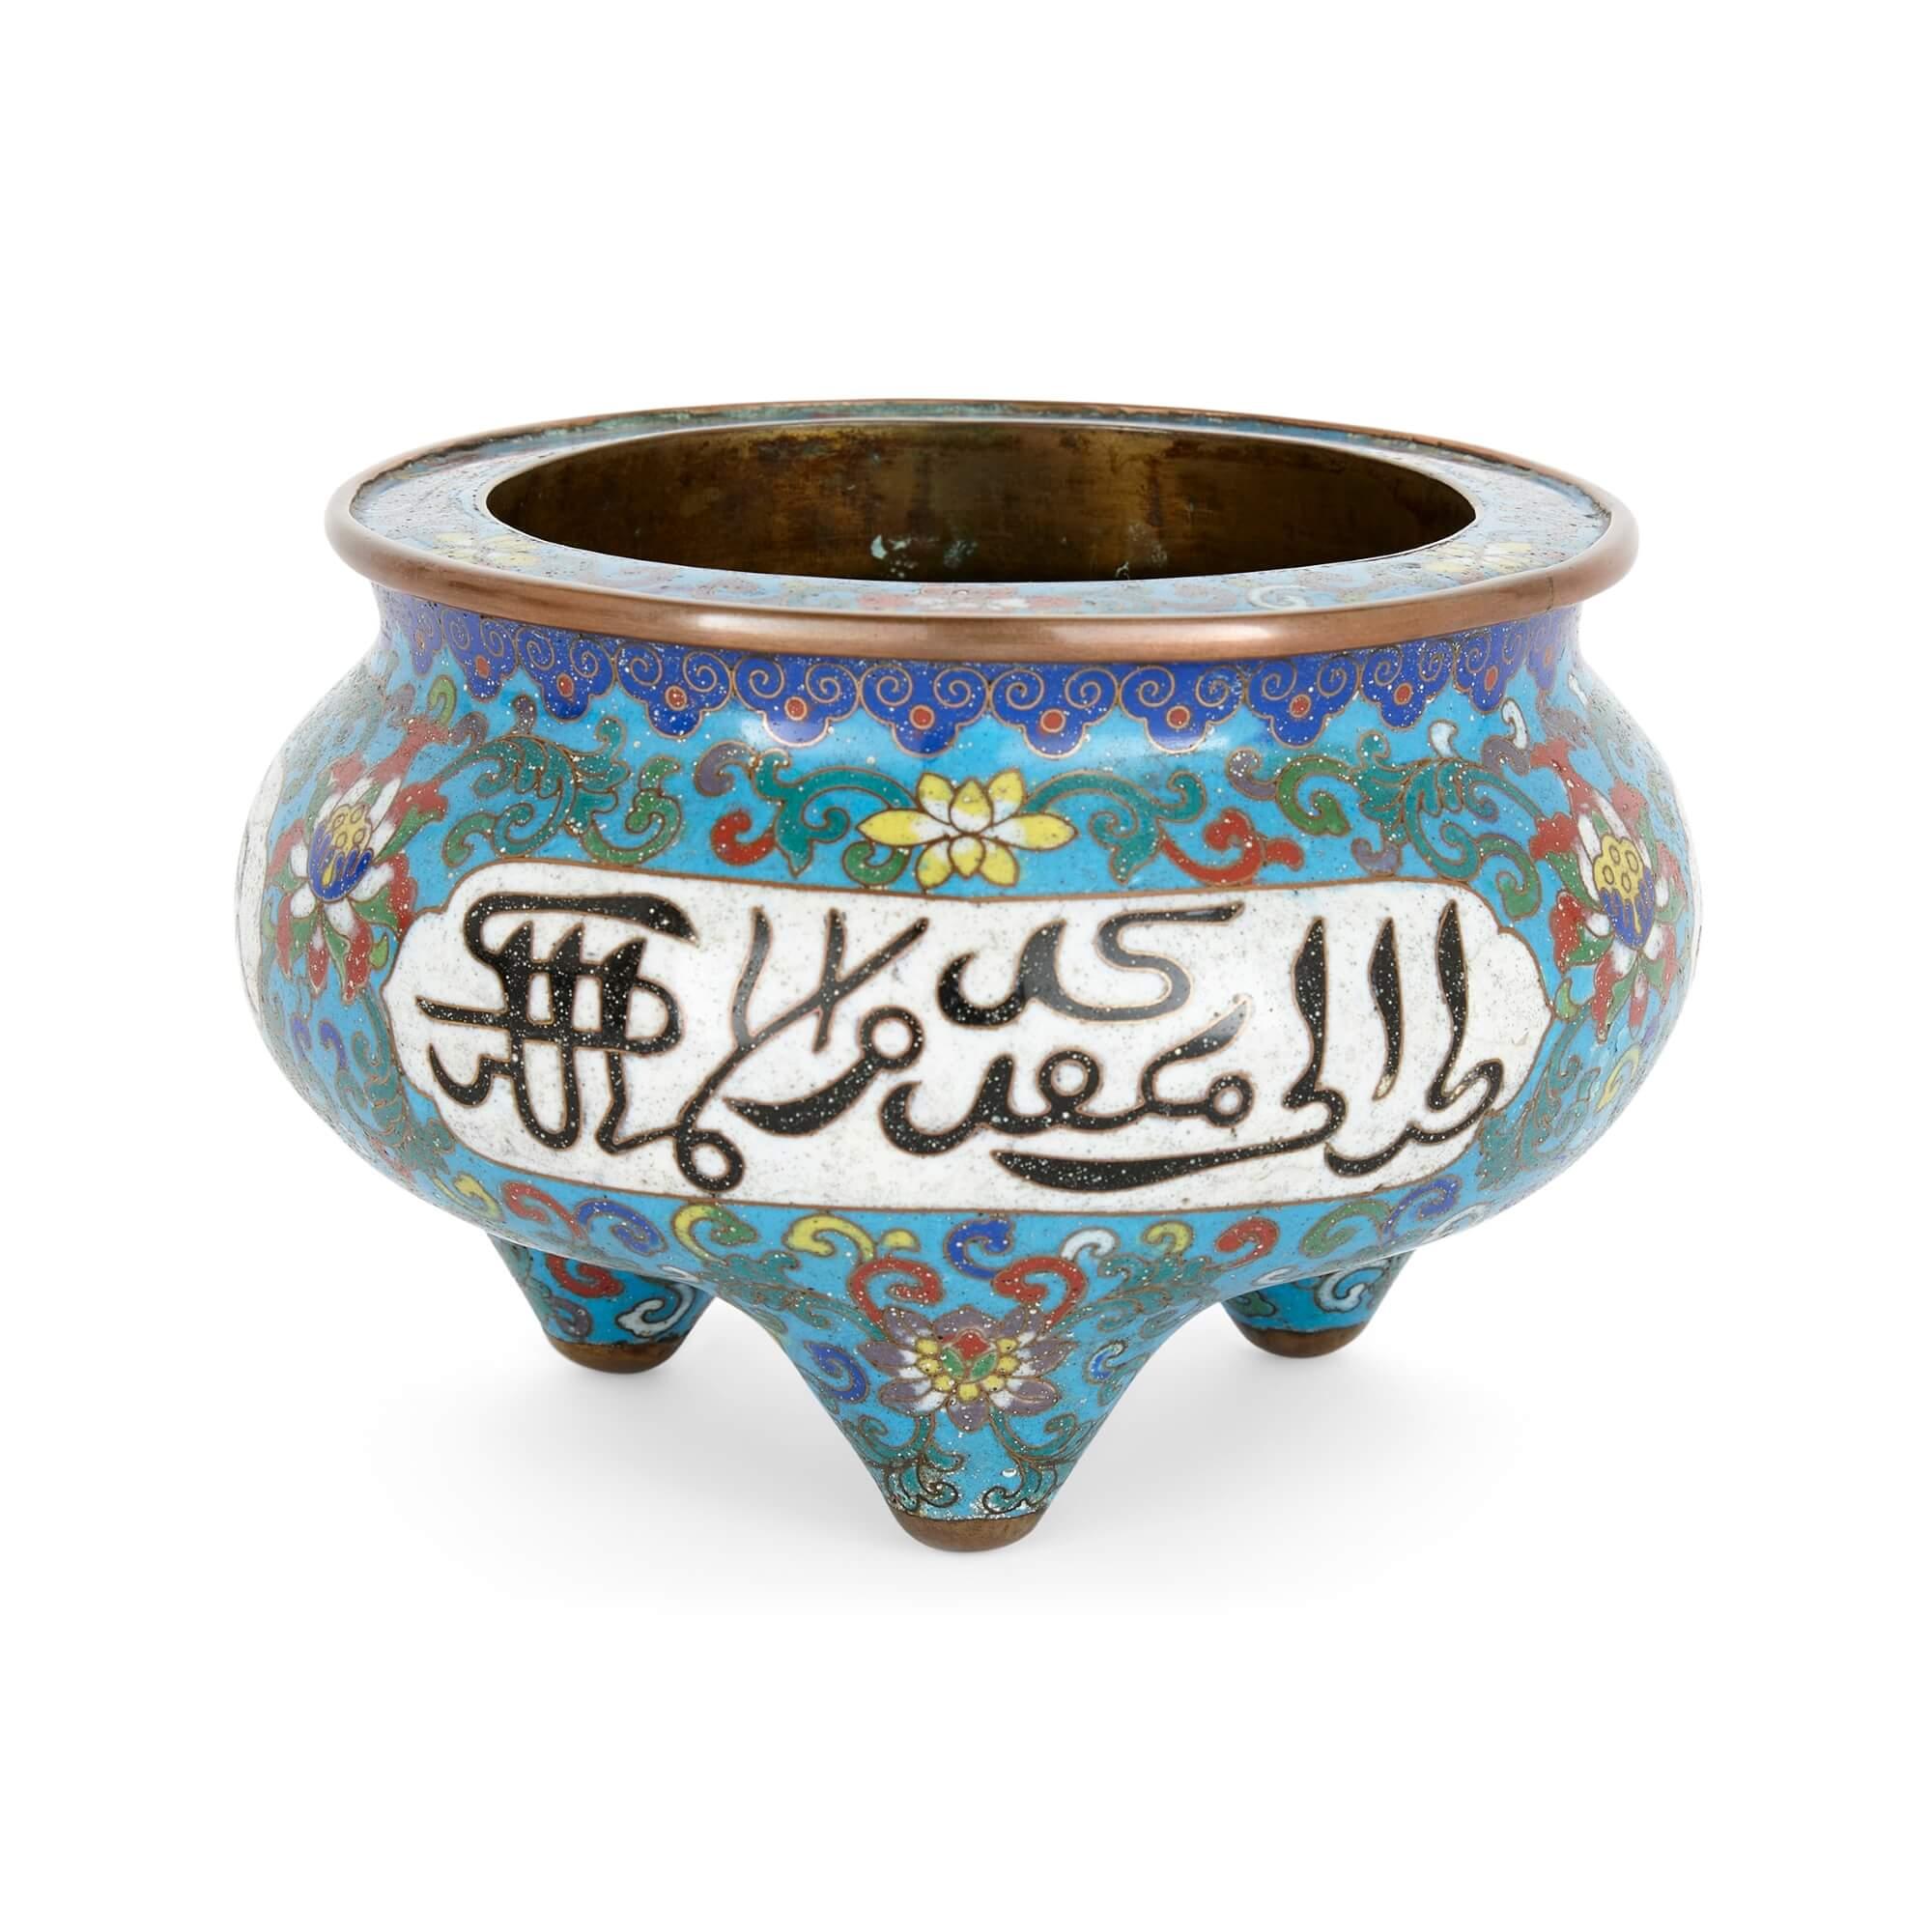 Cloissoné Qing Dynasty Cloisonné Enamel Chinese Vase with Arabic Inscriptions For Sale